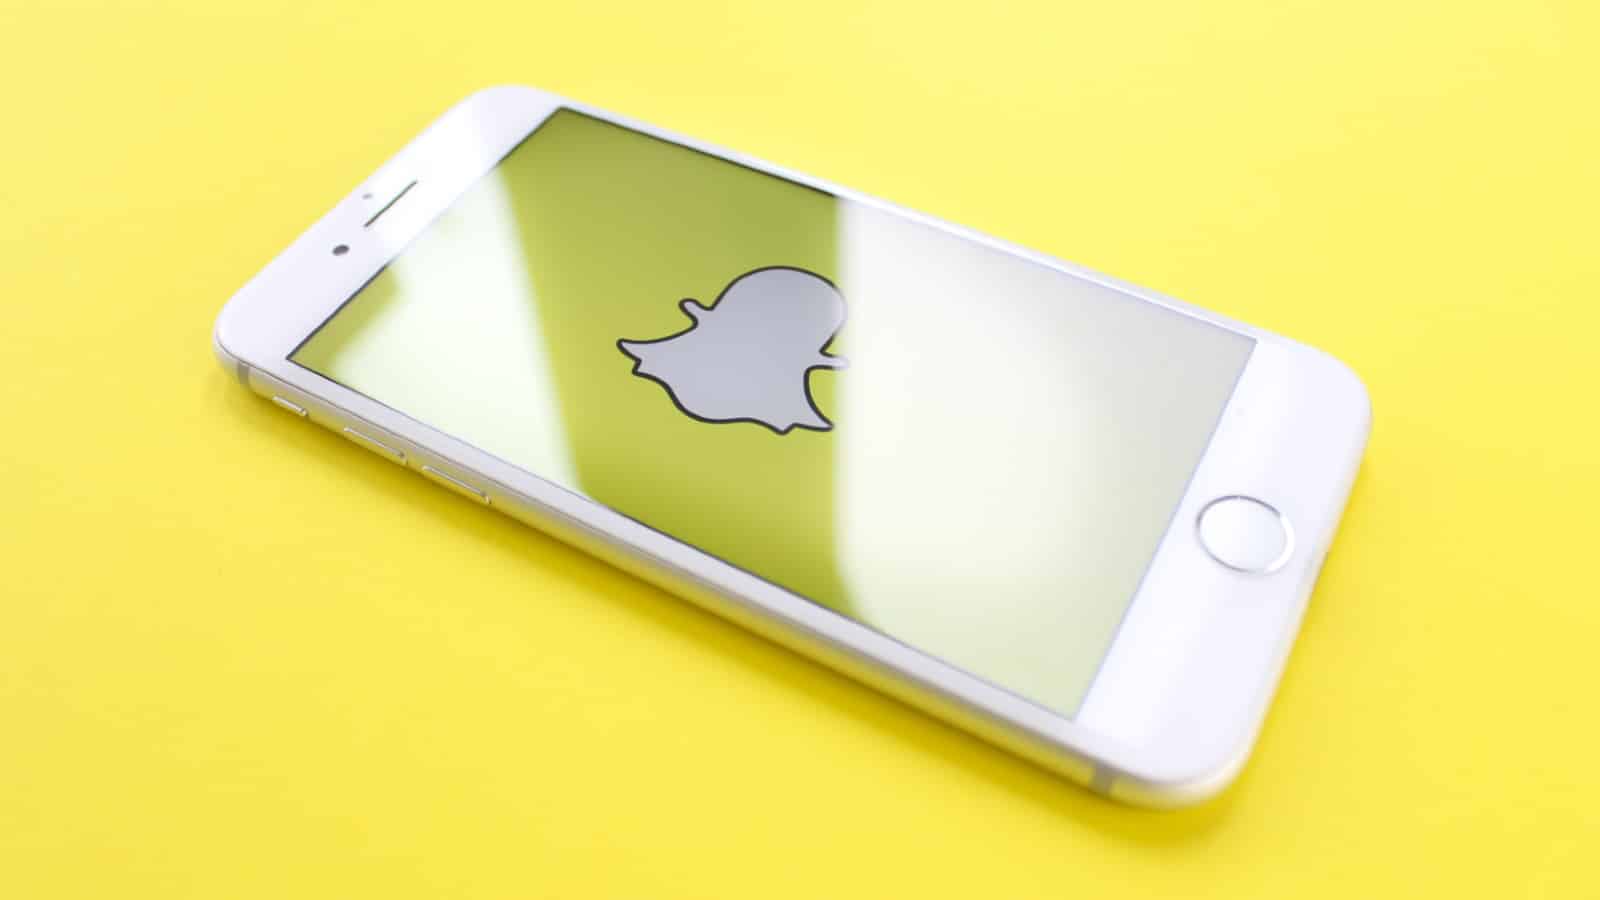 Snapchat logo on a phone